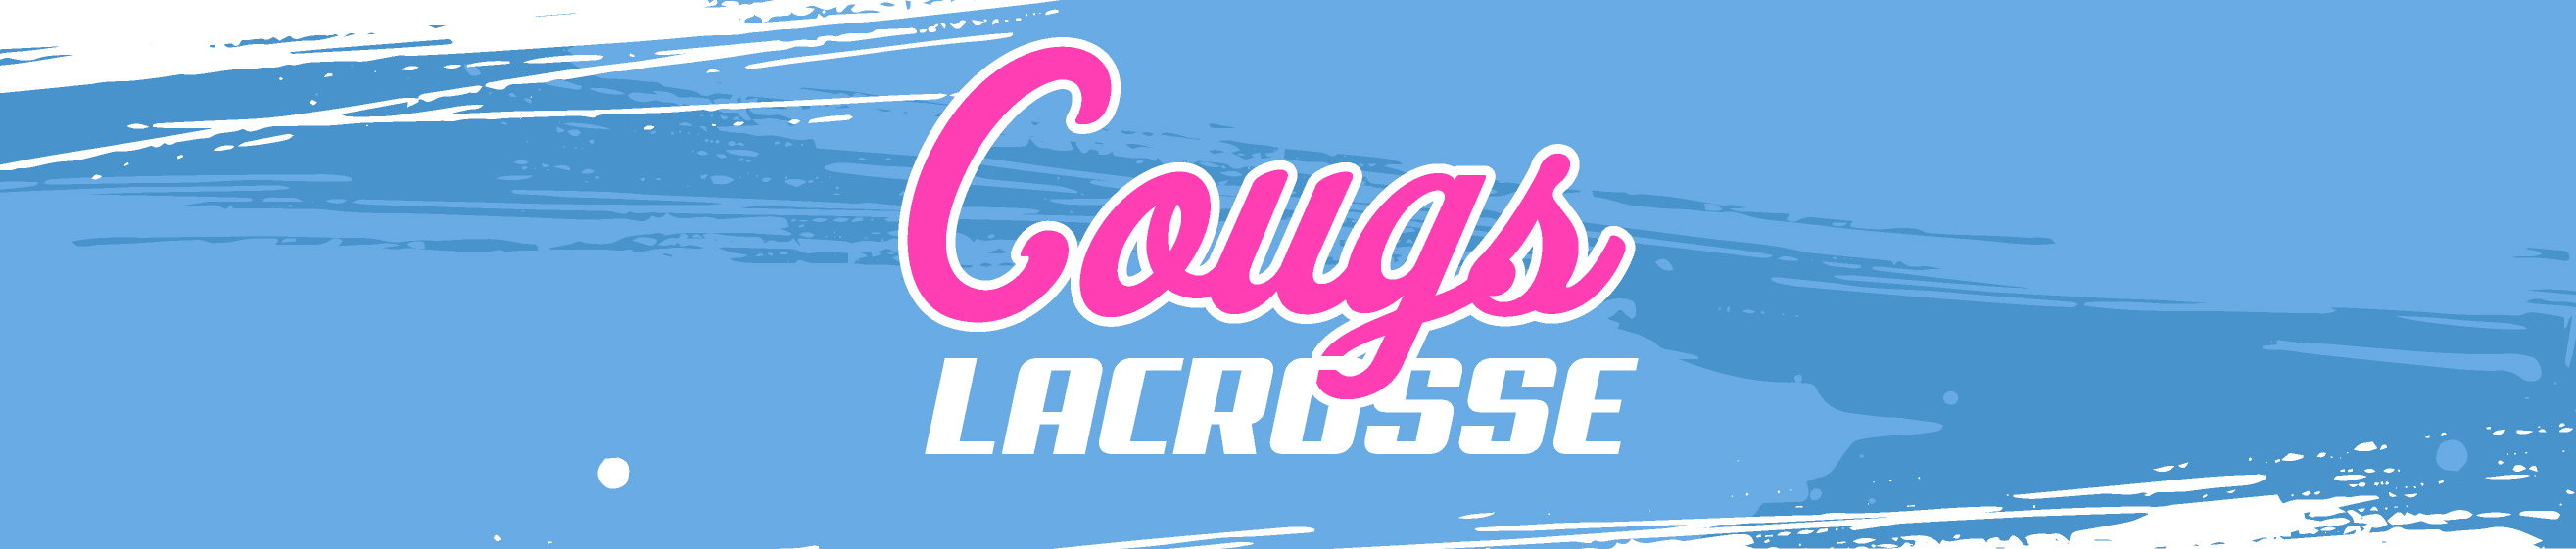 Cougs Lacrosse